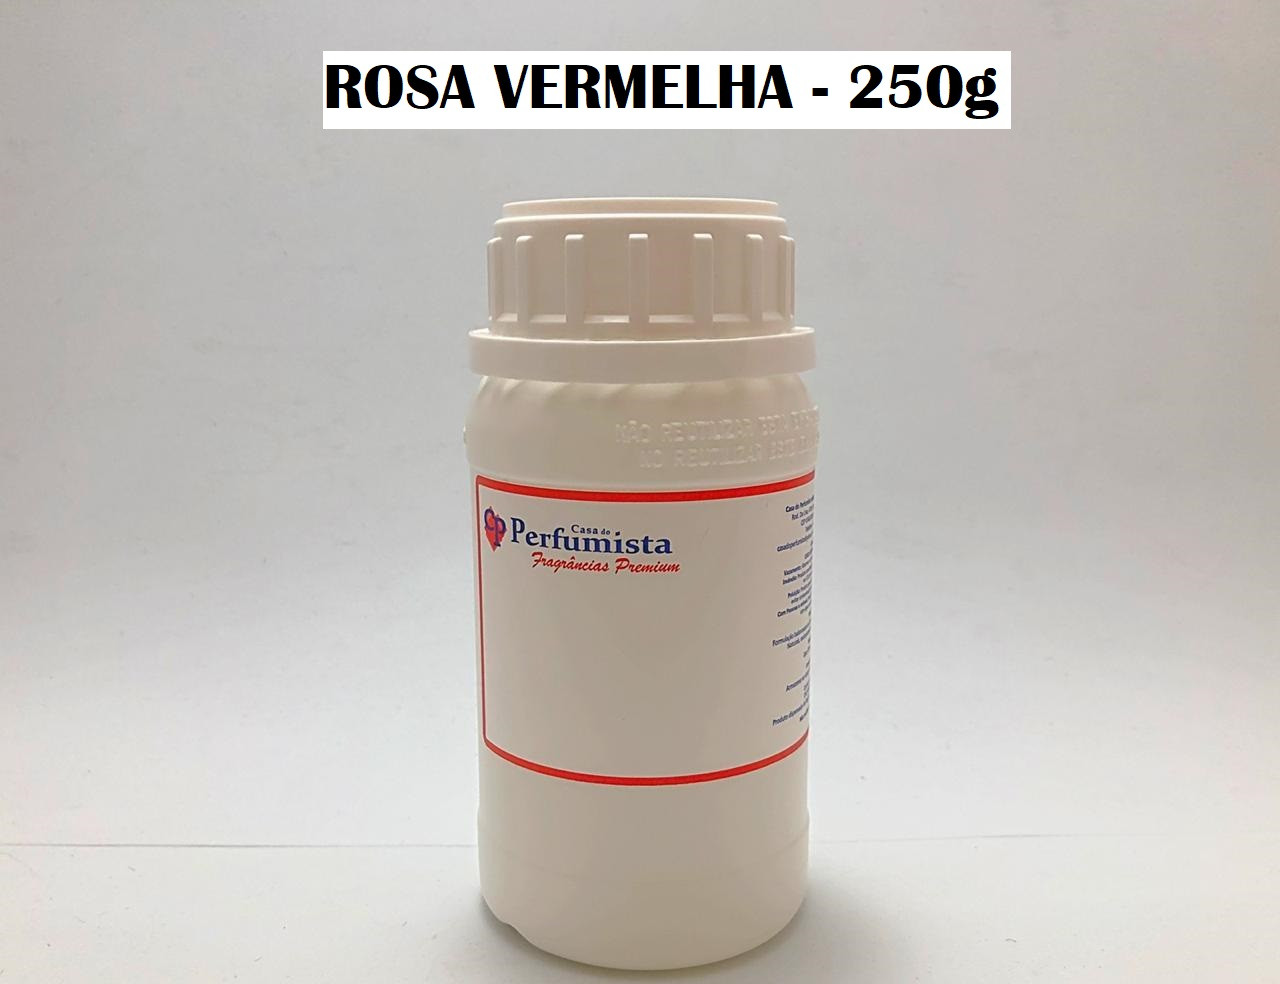 ROSA VERMELHA - 250g